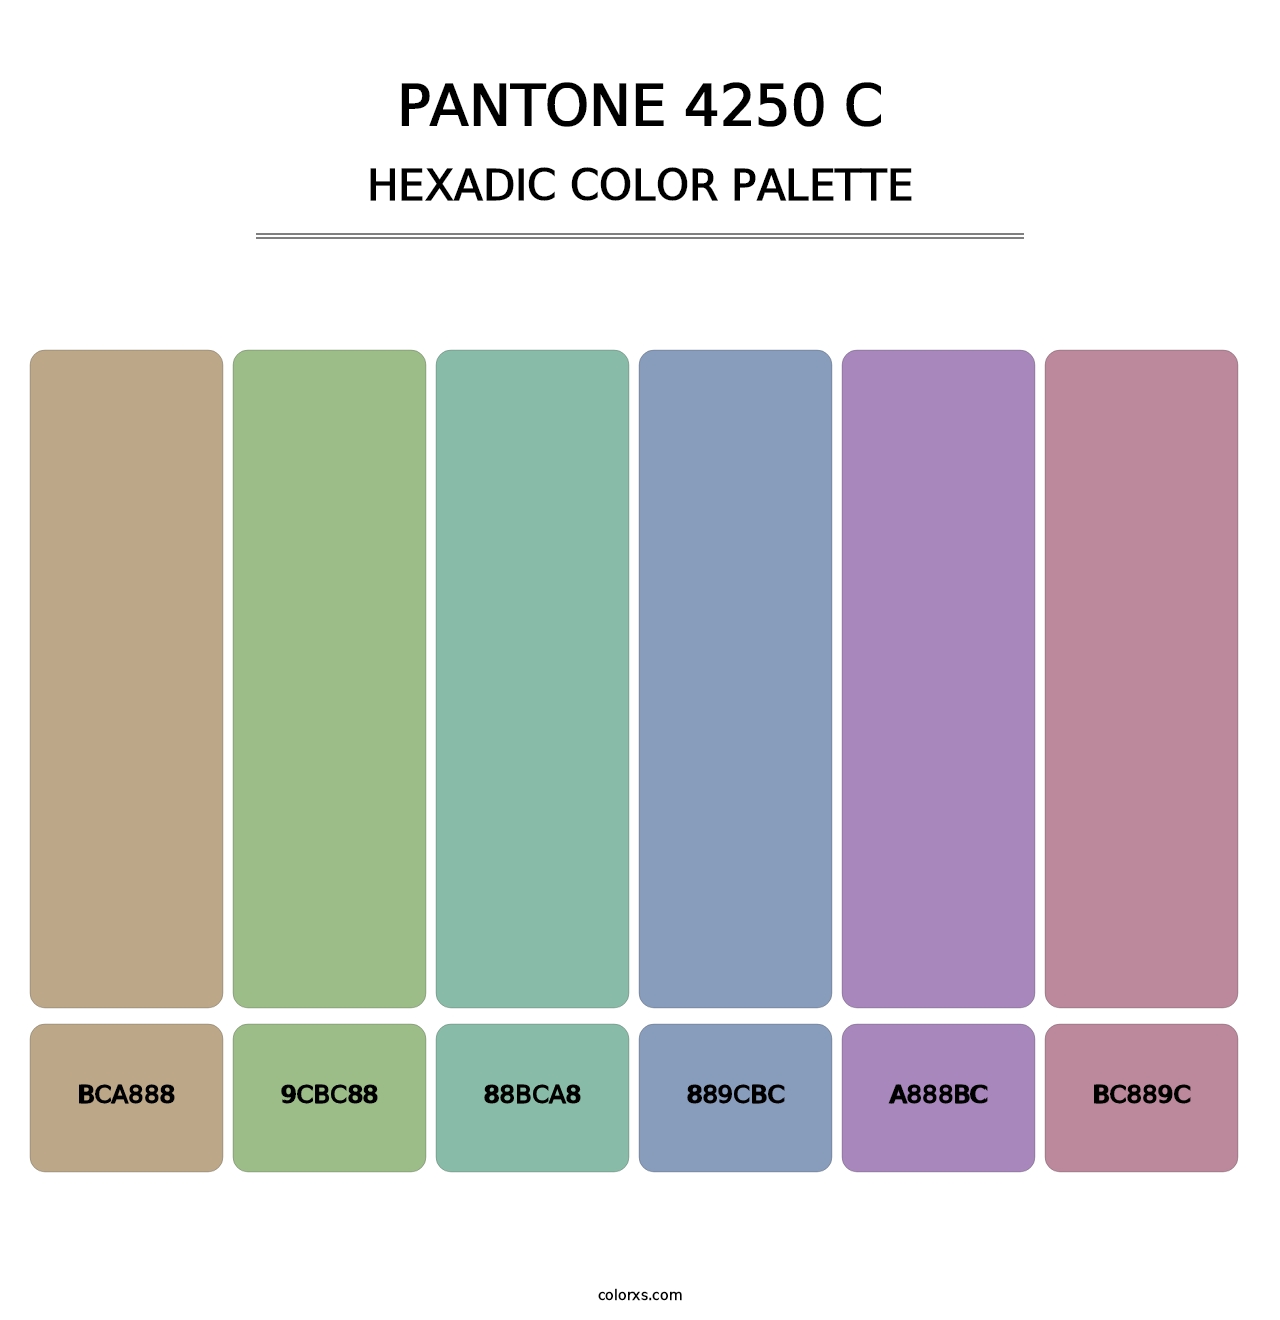 PANTONE 4250 C - Hexadic Color Palette